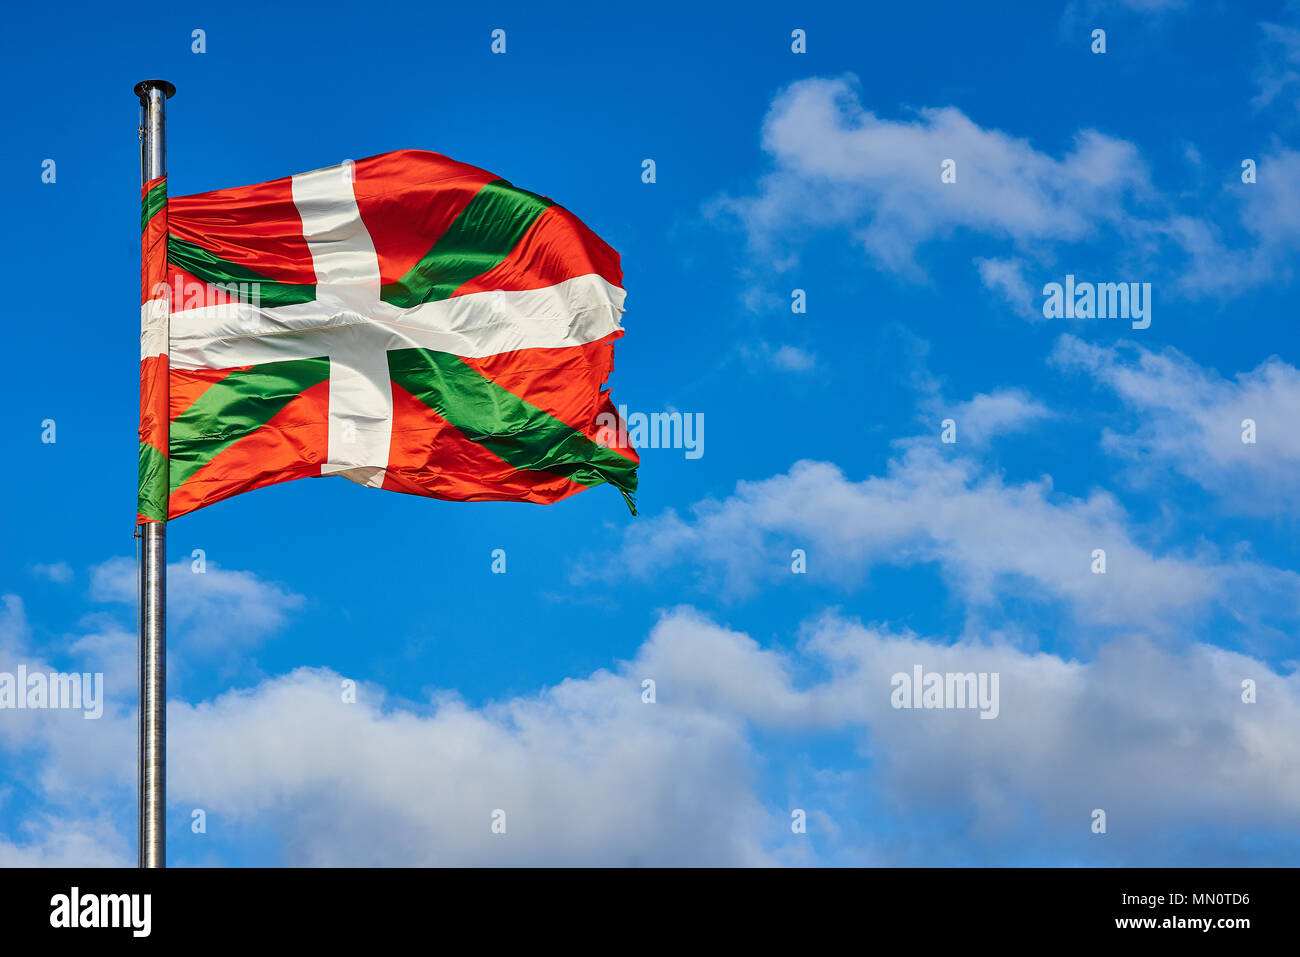 Ikurrina, Basque Country flag waving on a blue sky. Spain Stock Photo -  Alamy